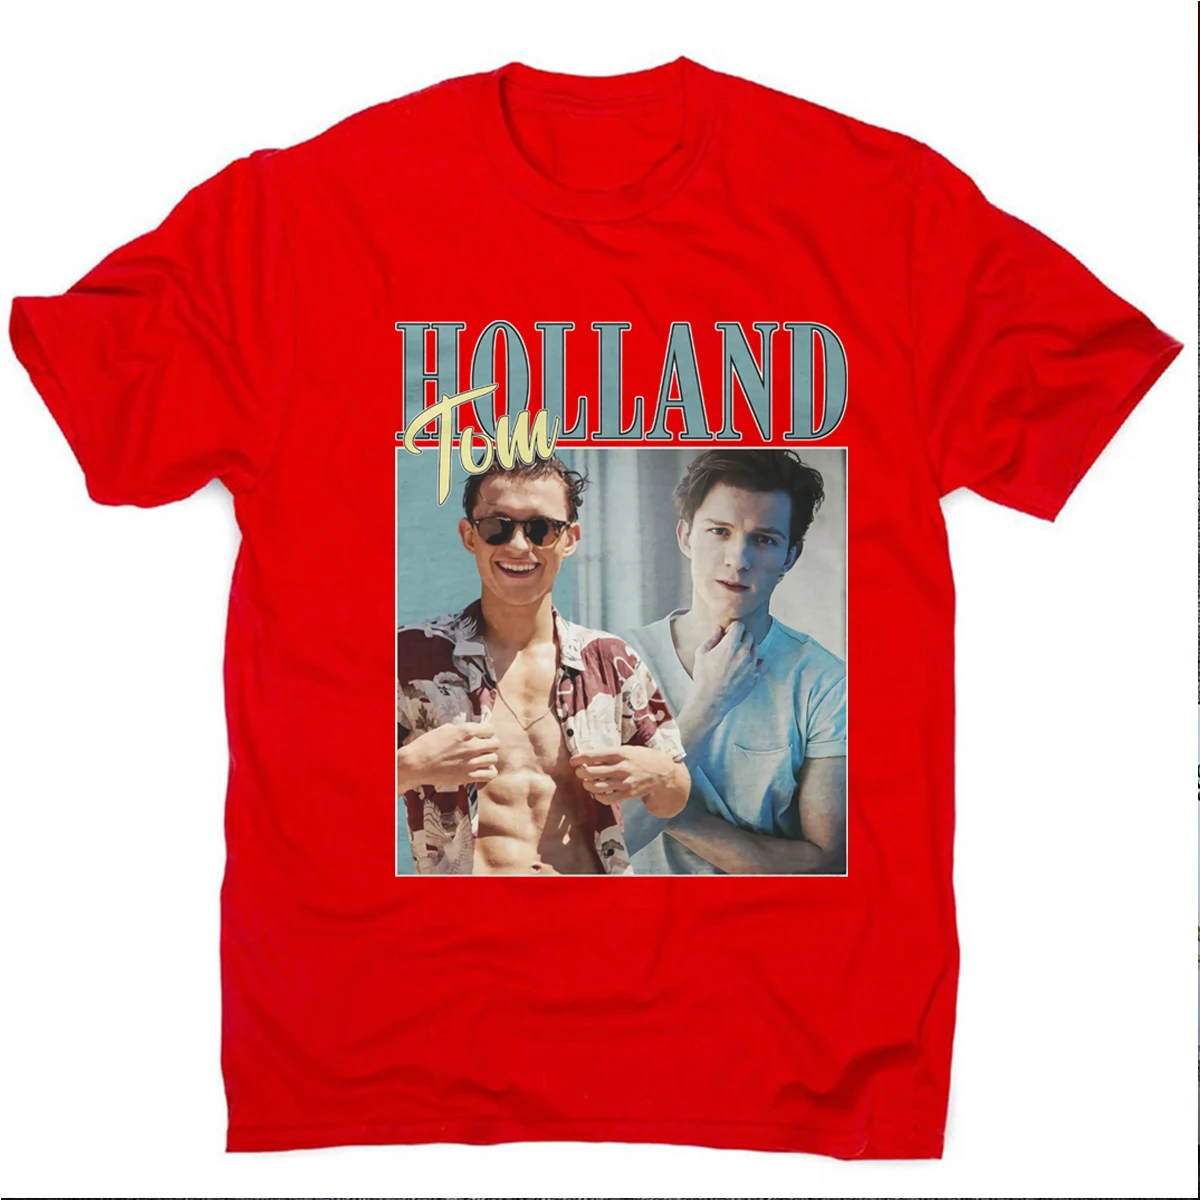 Tom holland shirt design retro style cool fan art t-shirt 90s poster 187 tee